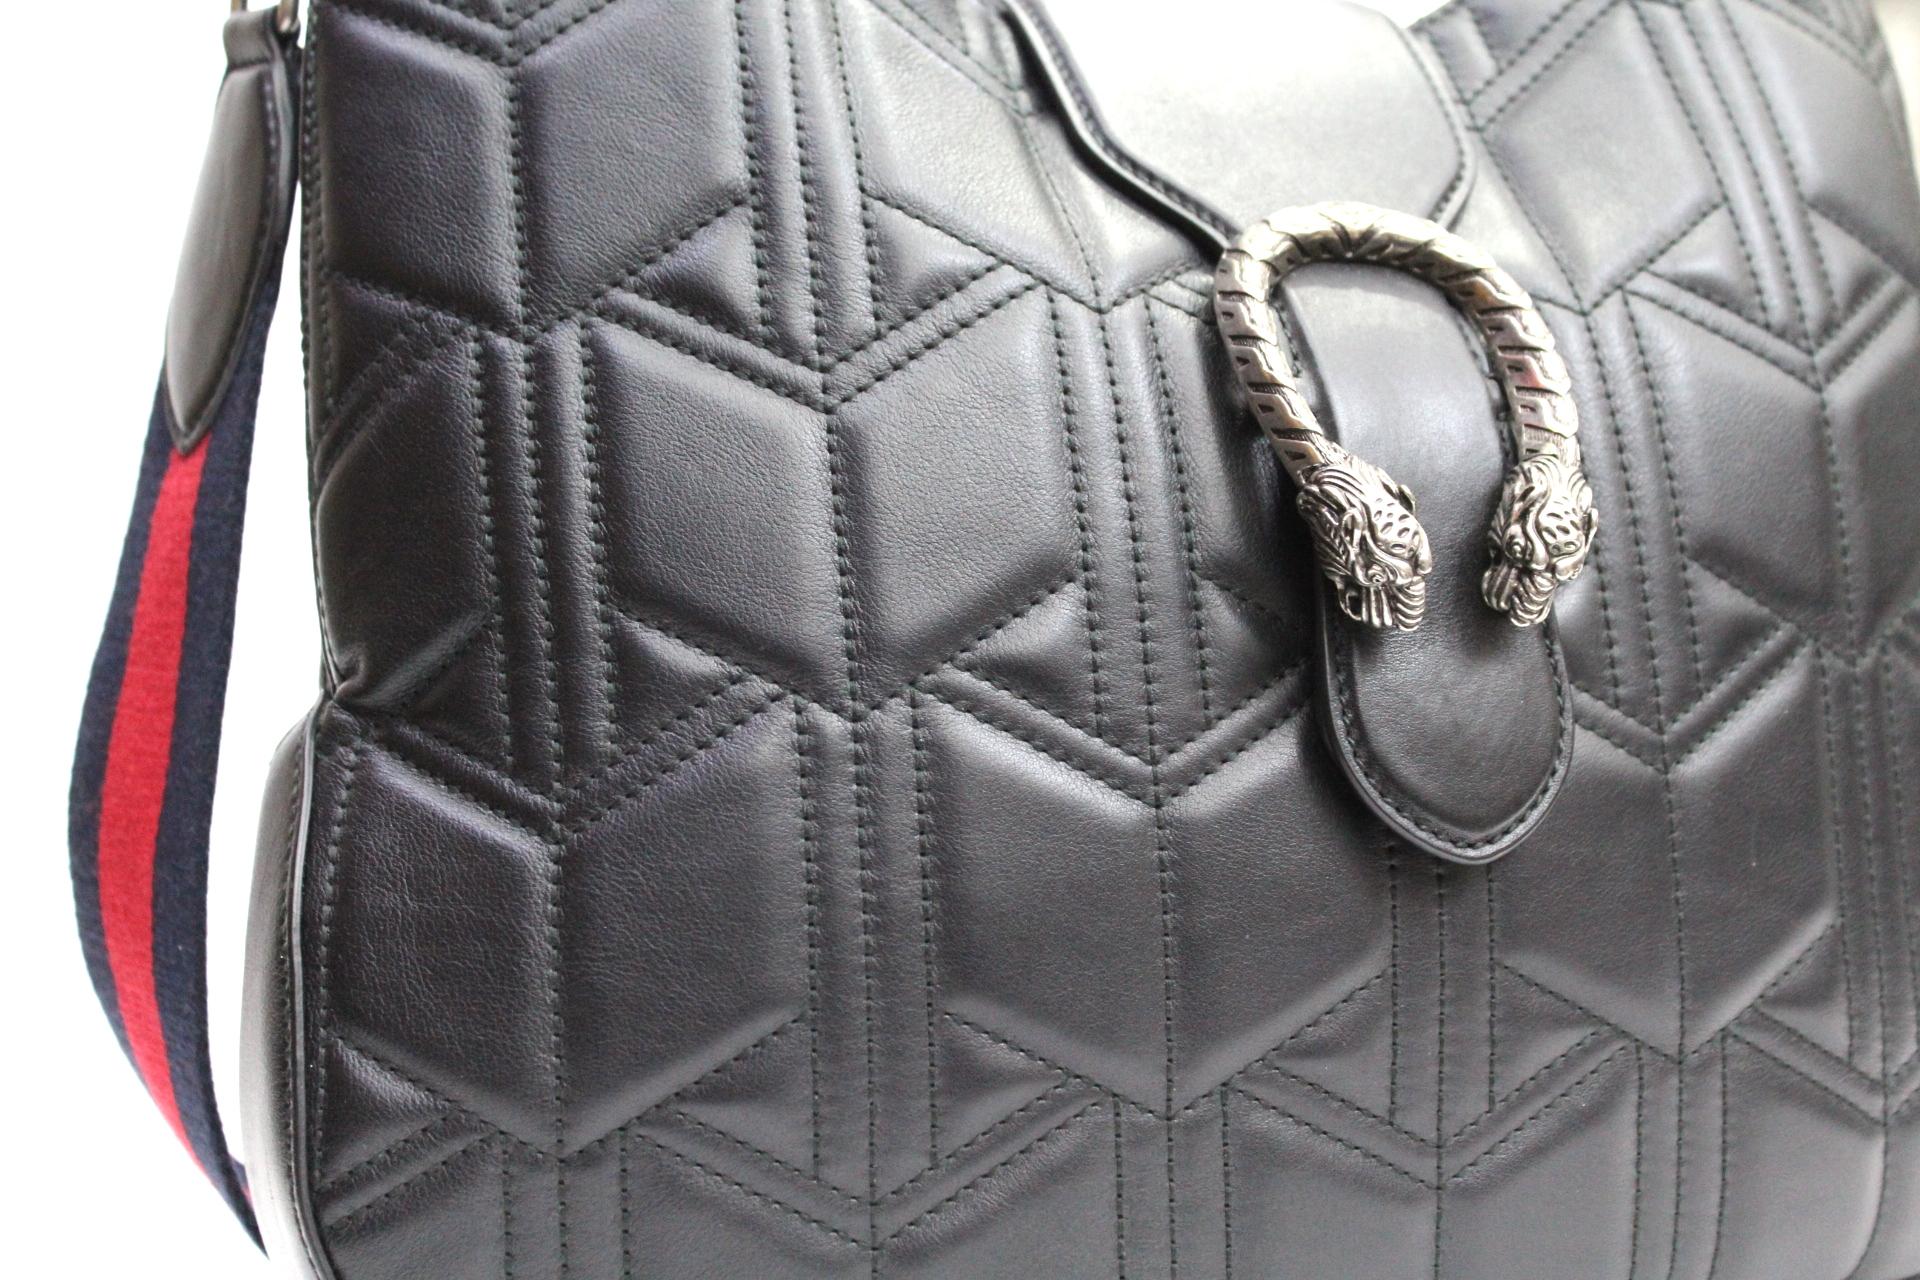 Women's 2017 Gucci Black Leather Dionysus Bag